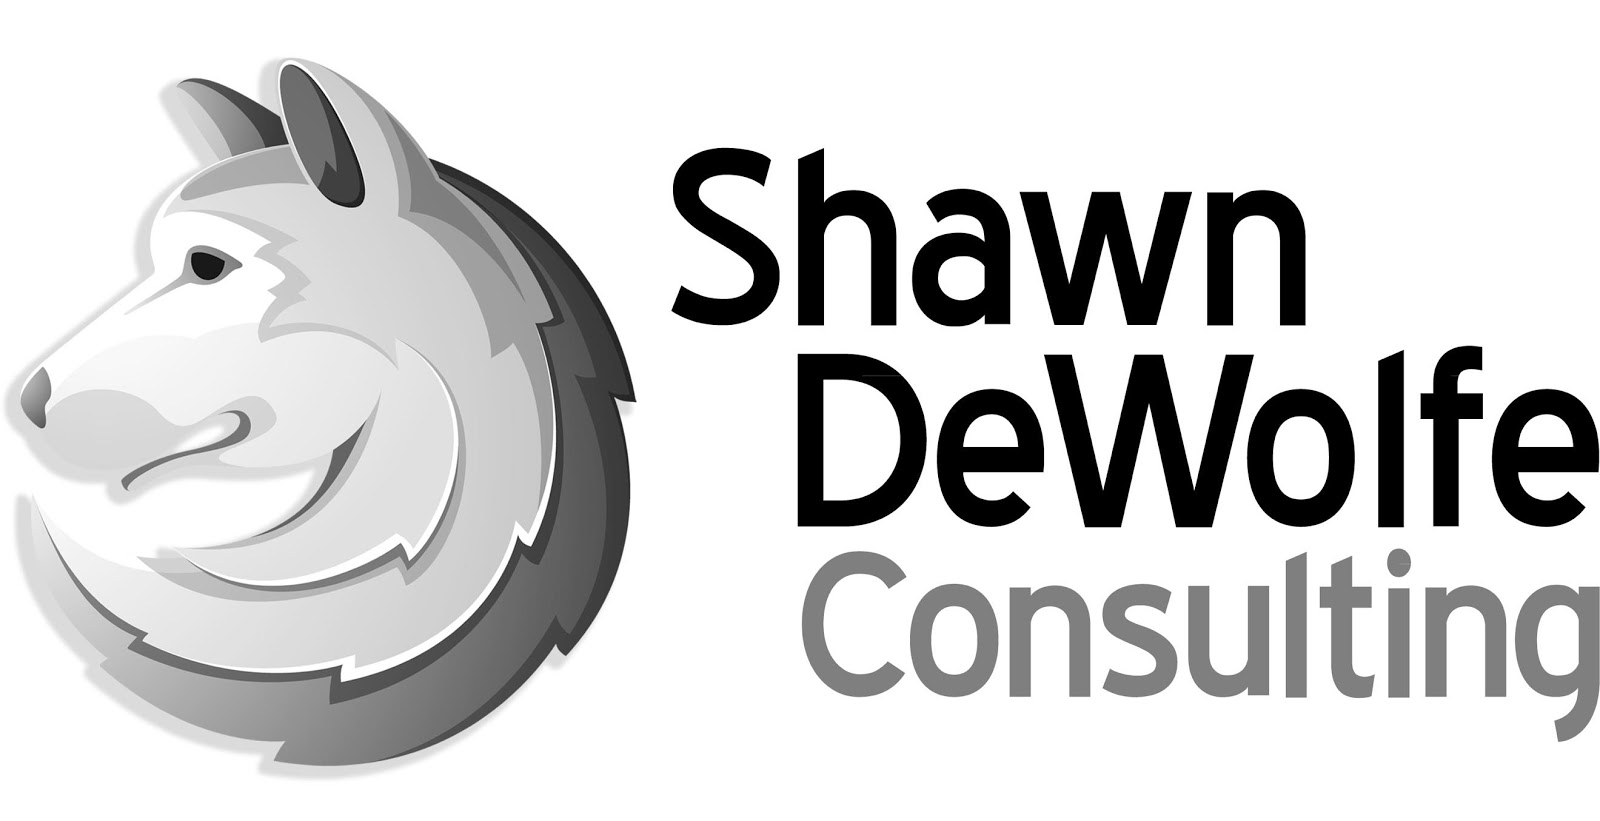 Shawn DeWolfe Consulting